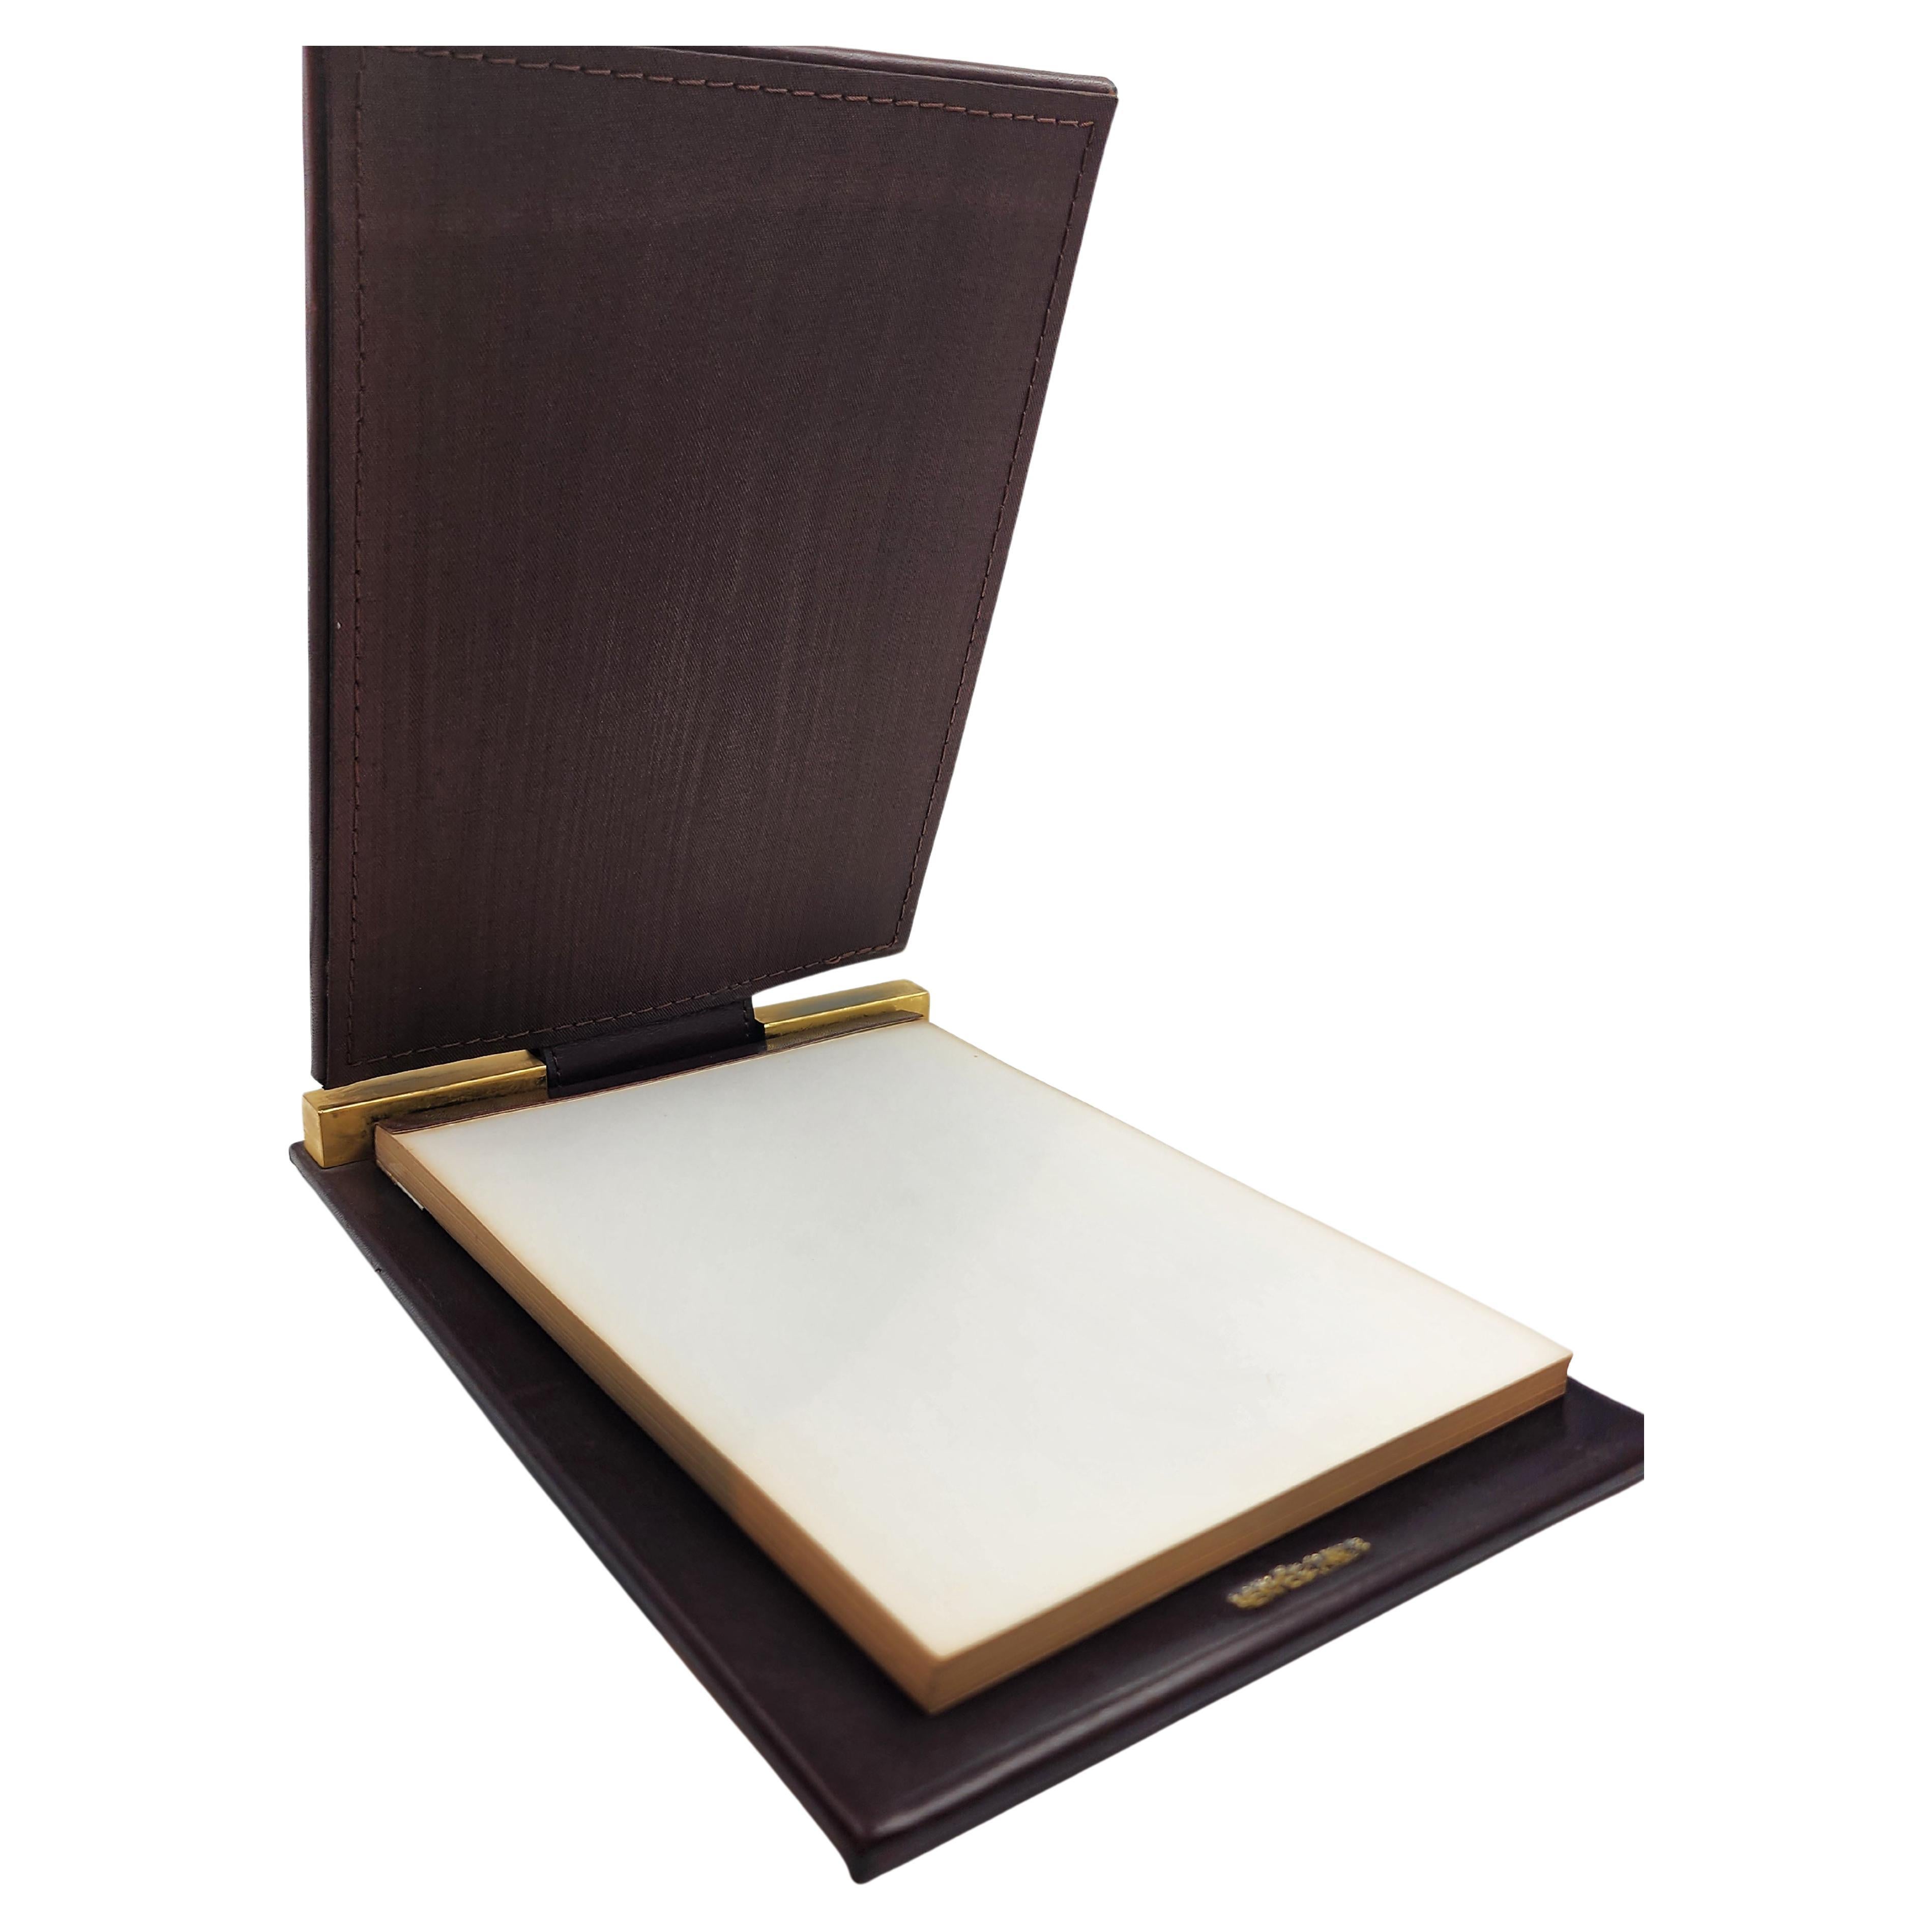 Hermes Paris leather notepad, desk accessory For Sale